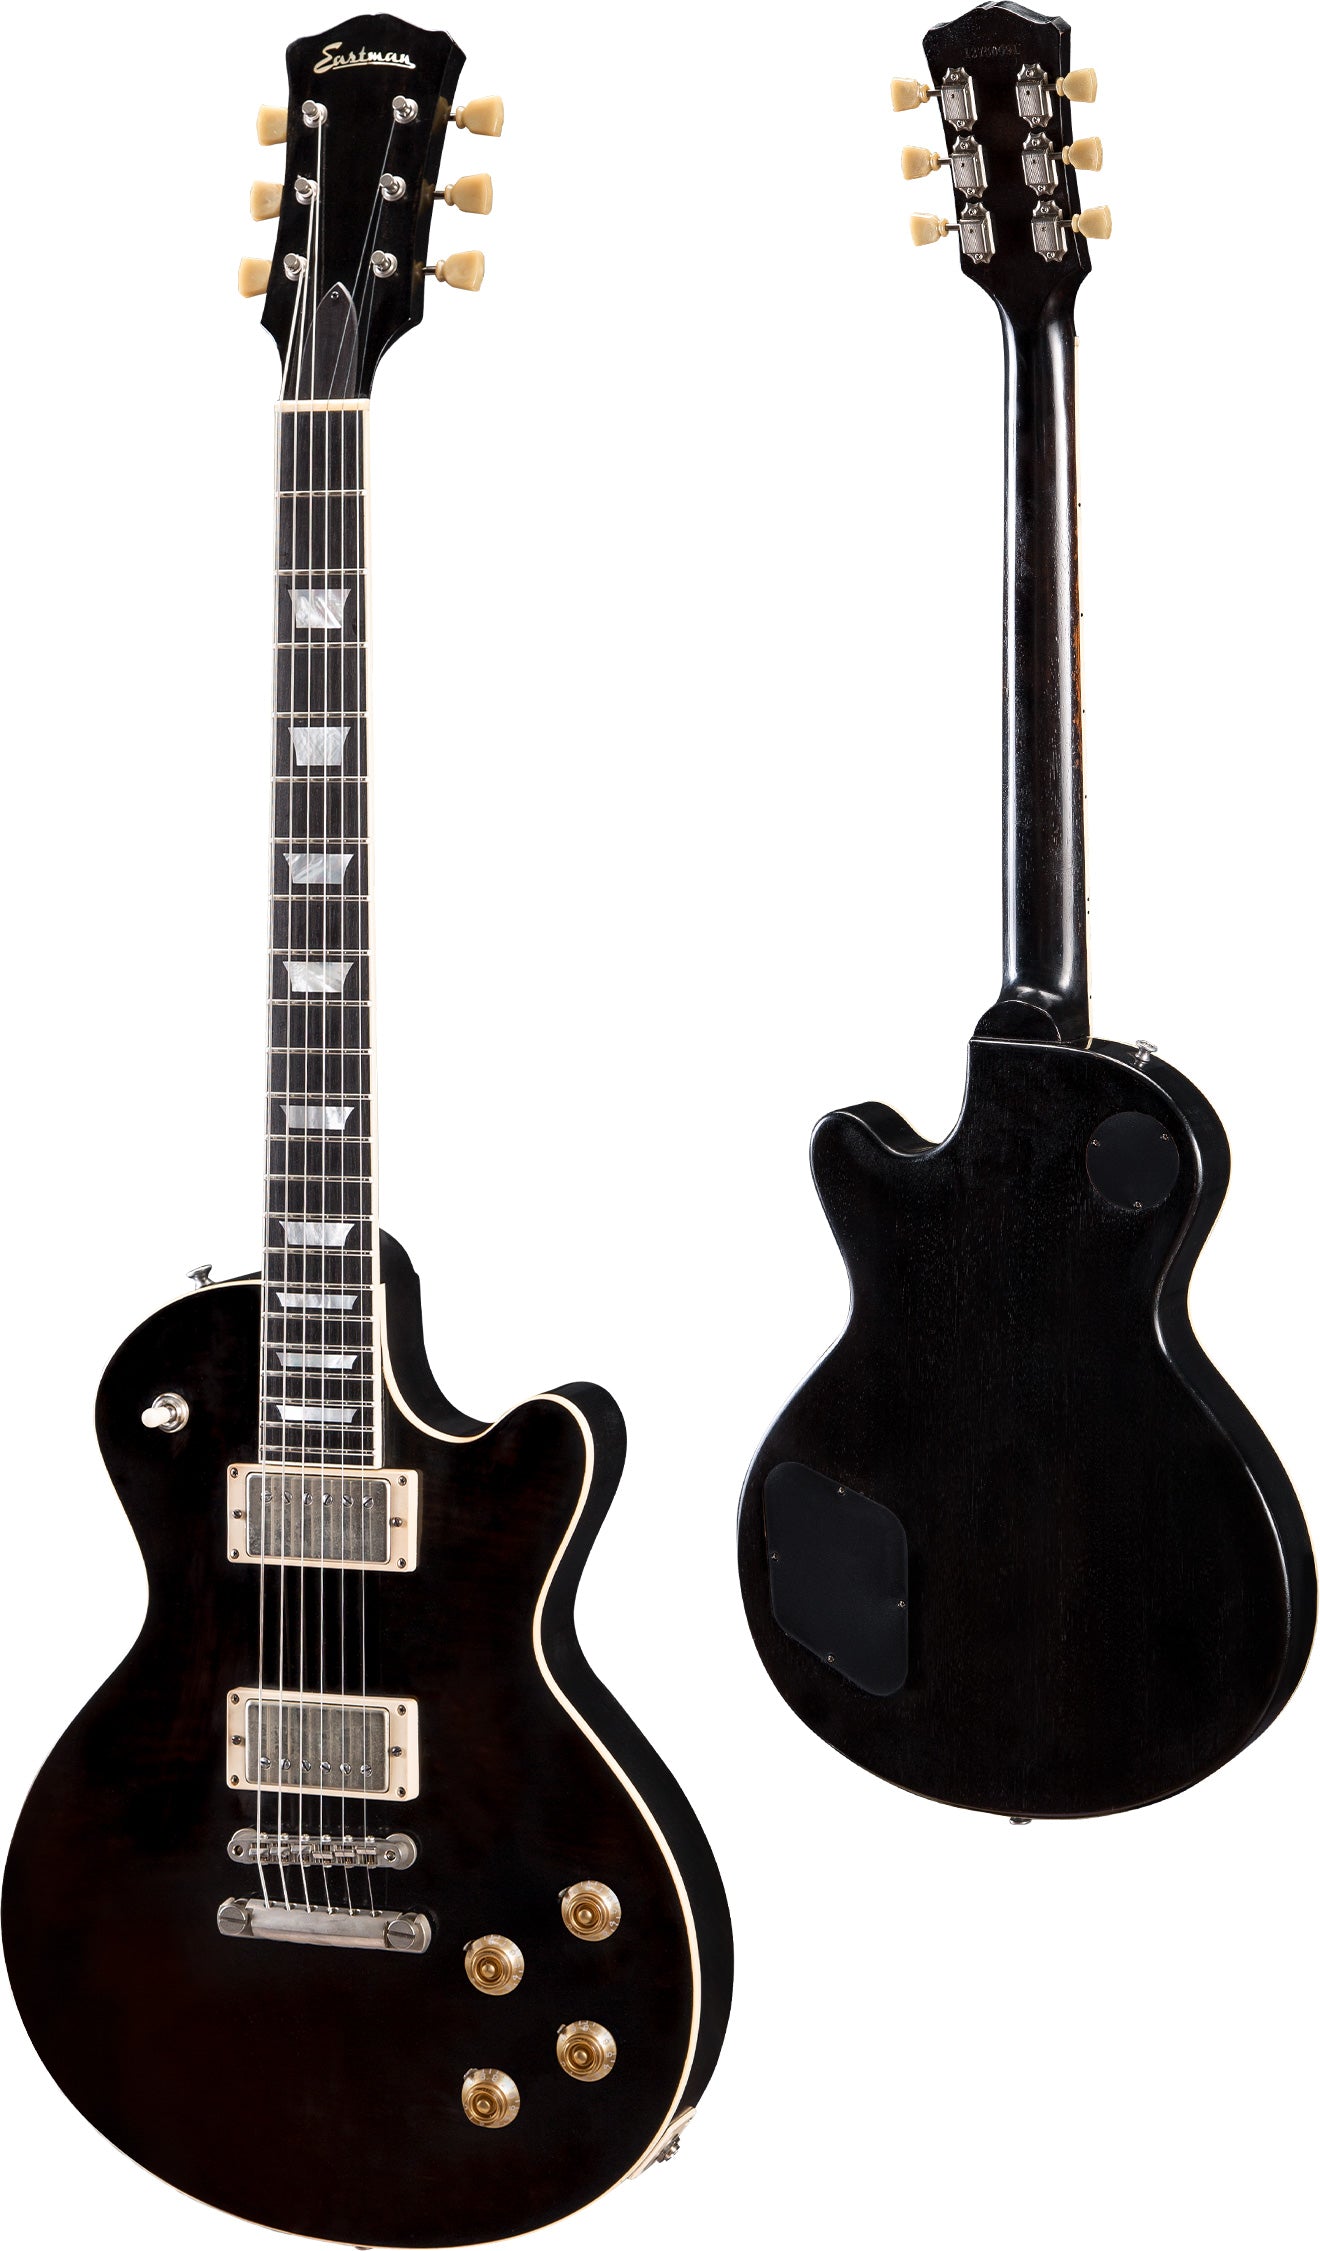 Eastman SB59/TV BK, Electric Guitar for sale at Richards Guitars.